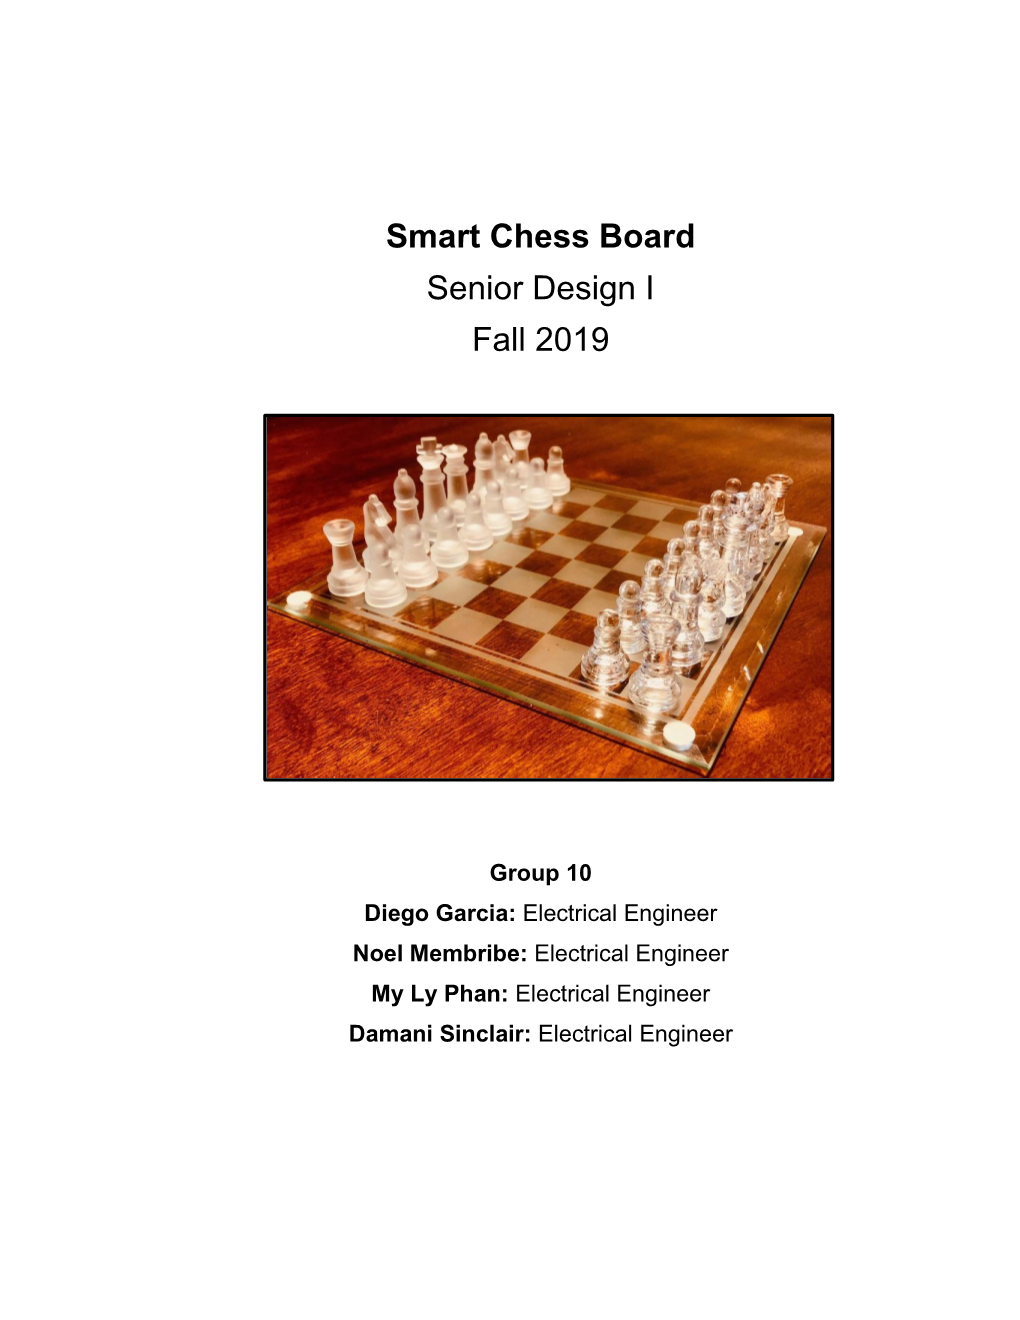 Smart Chess Board Senior Design I Fall 2019